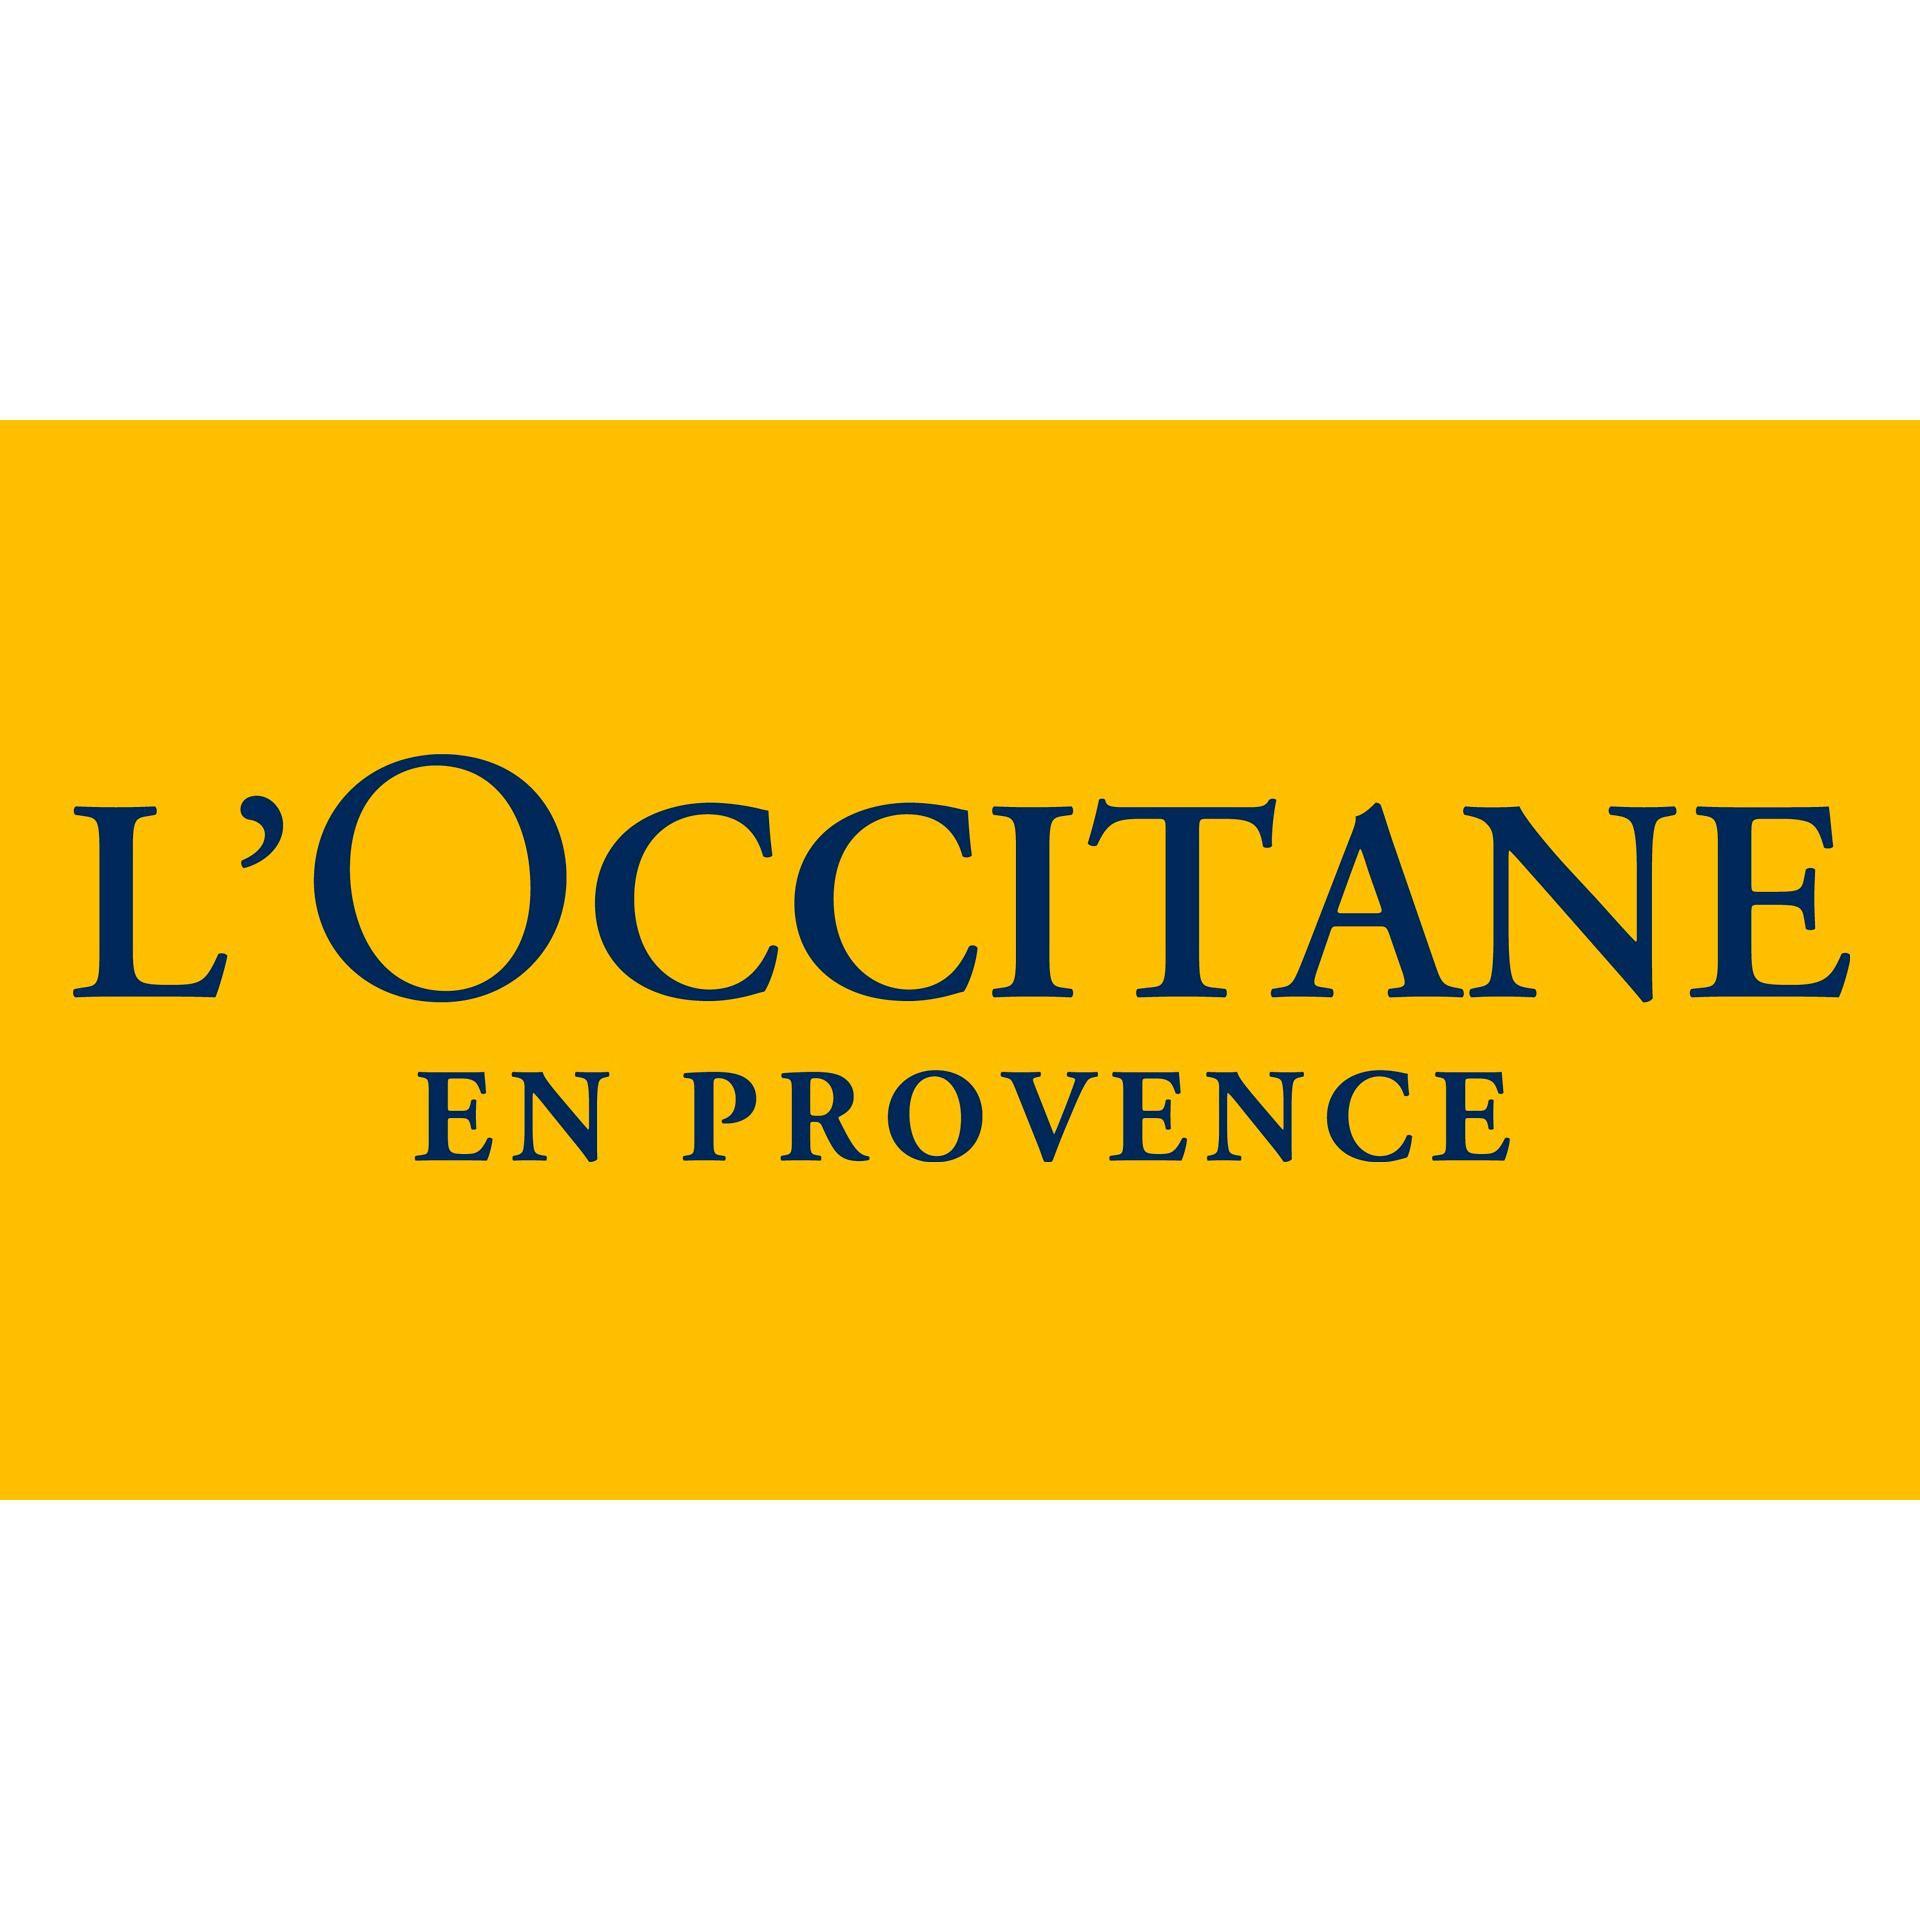 L'occitane En Provence Compiègne